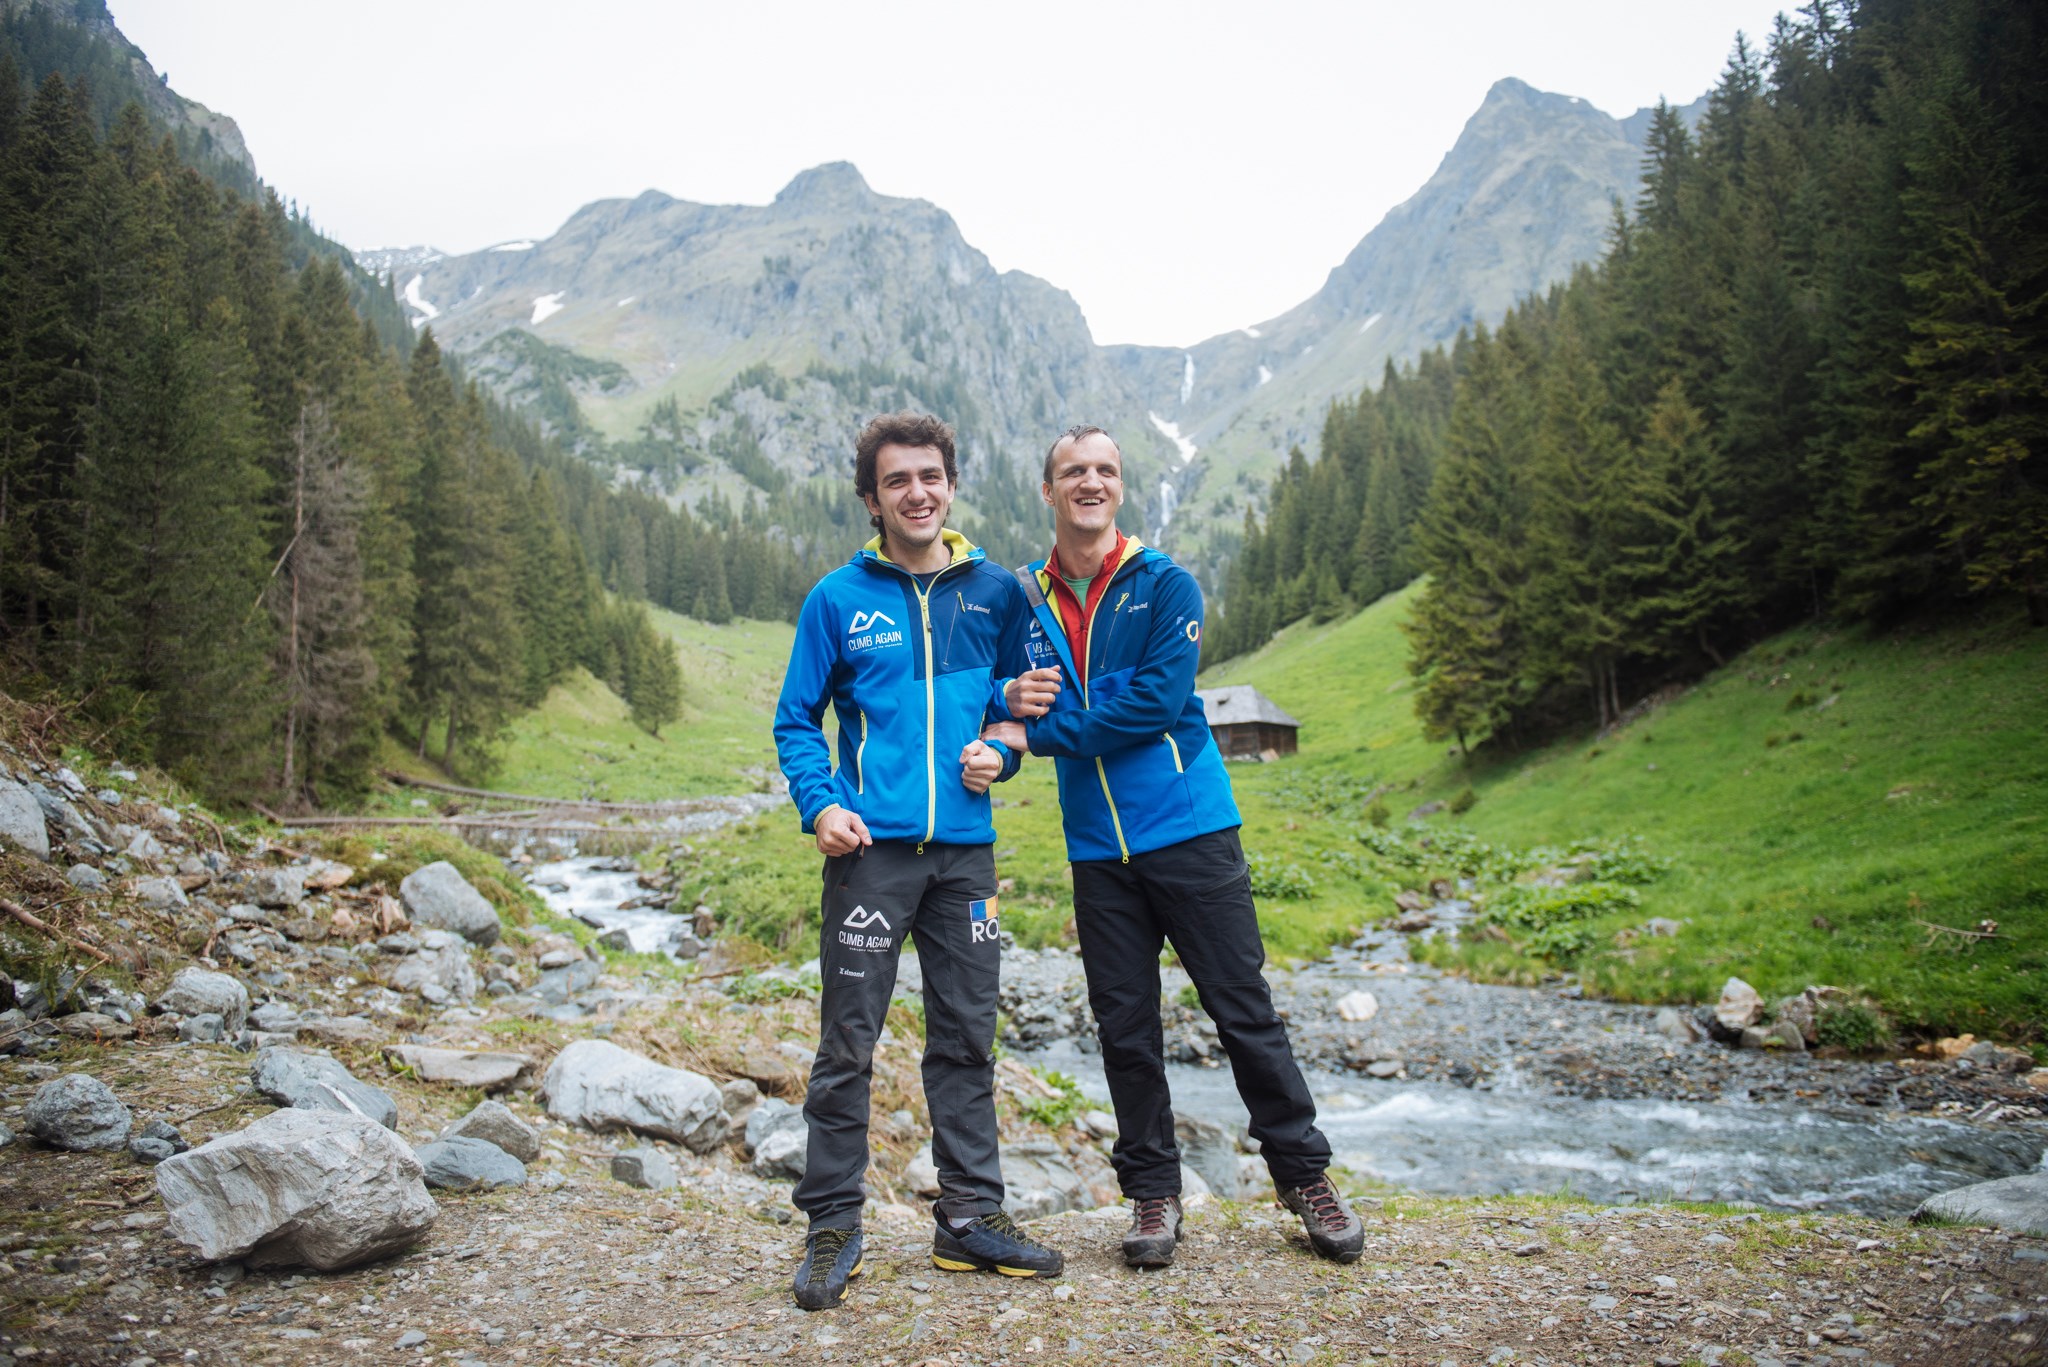 doi-alpinisti-nevazatori-din-romania-vor-sa-cucereasca-vf-mont-blanc